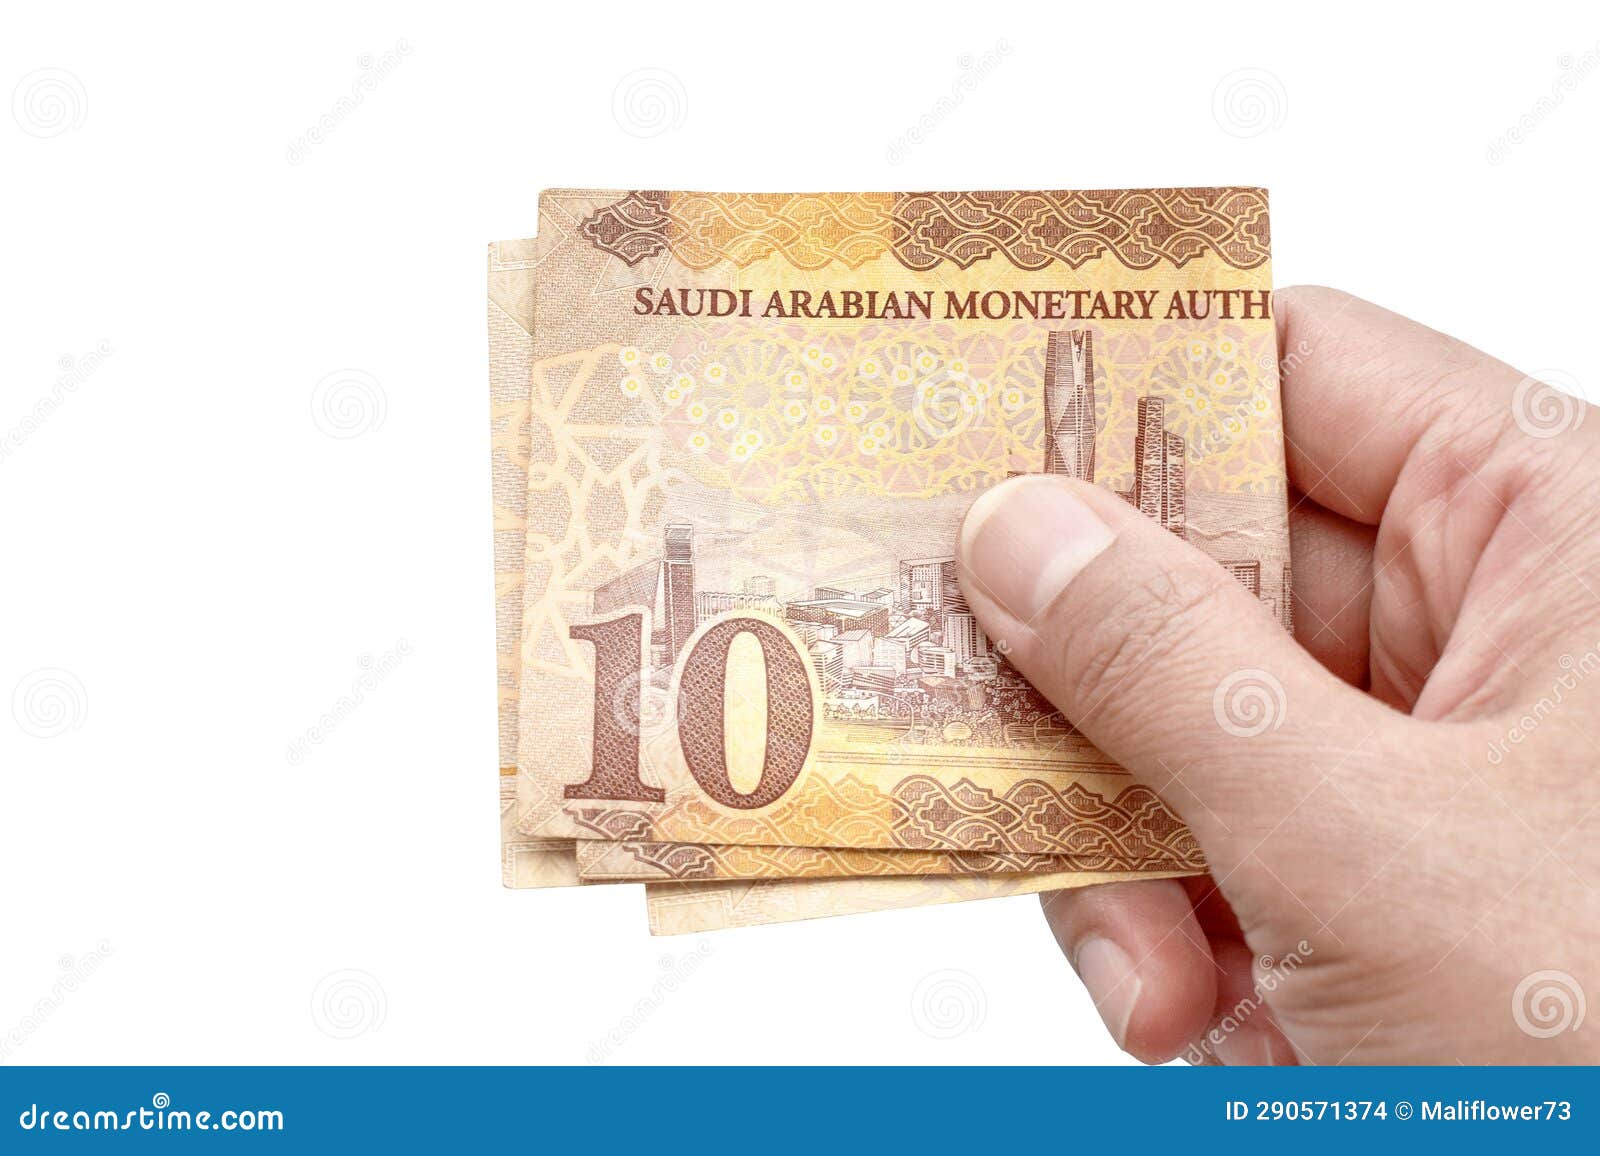 10 riyal saudi arabia money banknotes in hand  on white background.